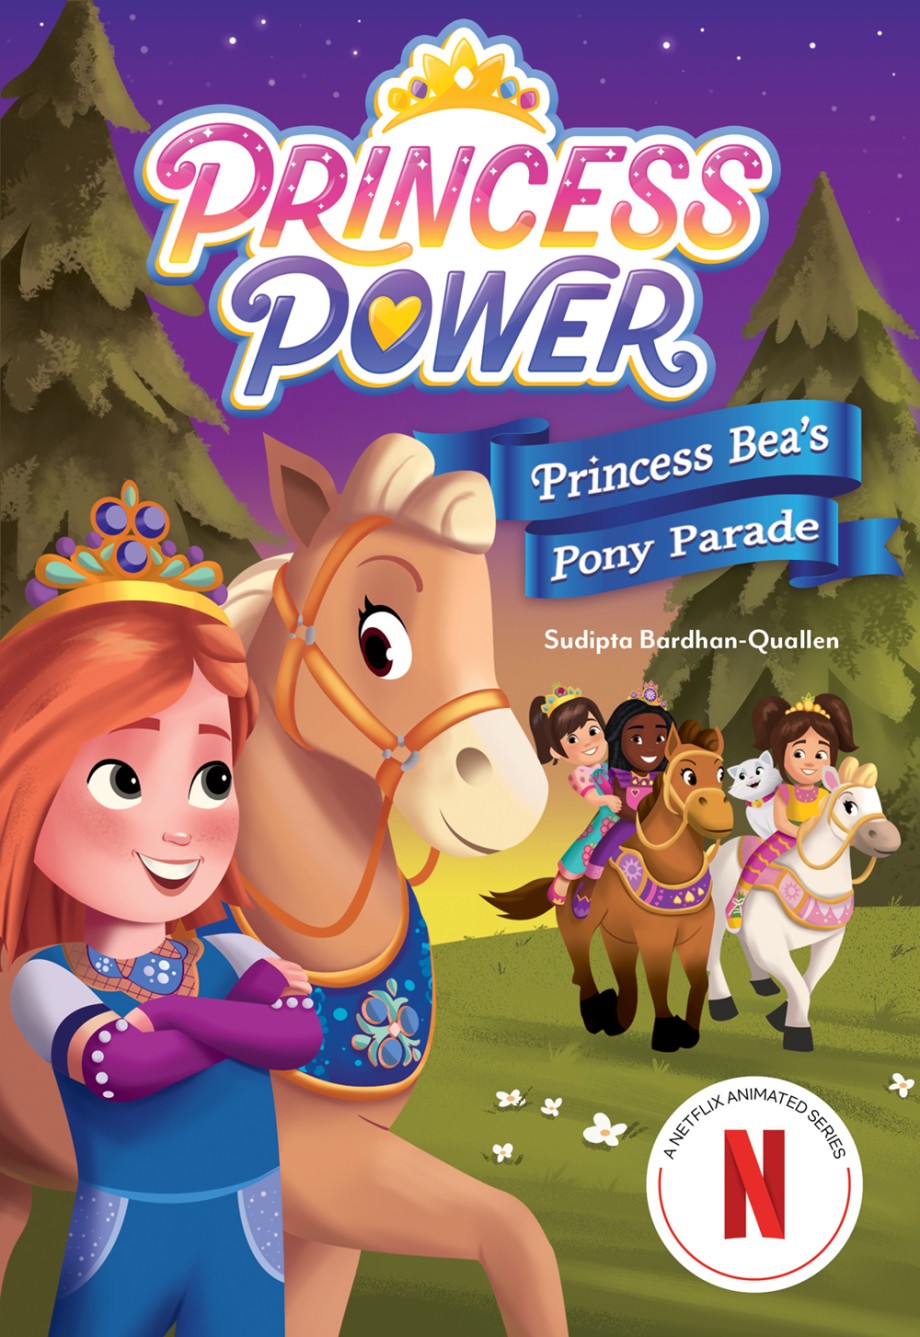 Princess Bea's Pony Parade (Princess Power Chapter Book #2) 